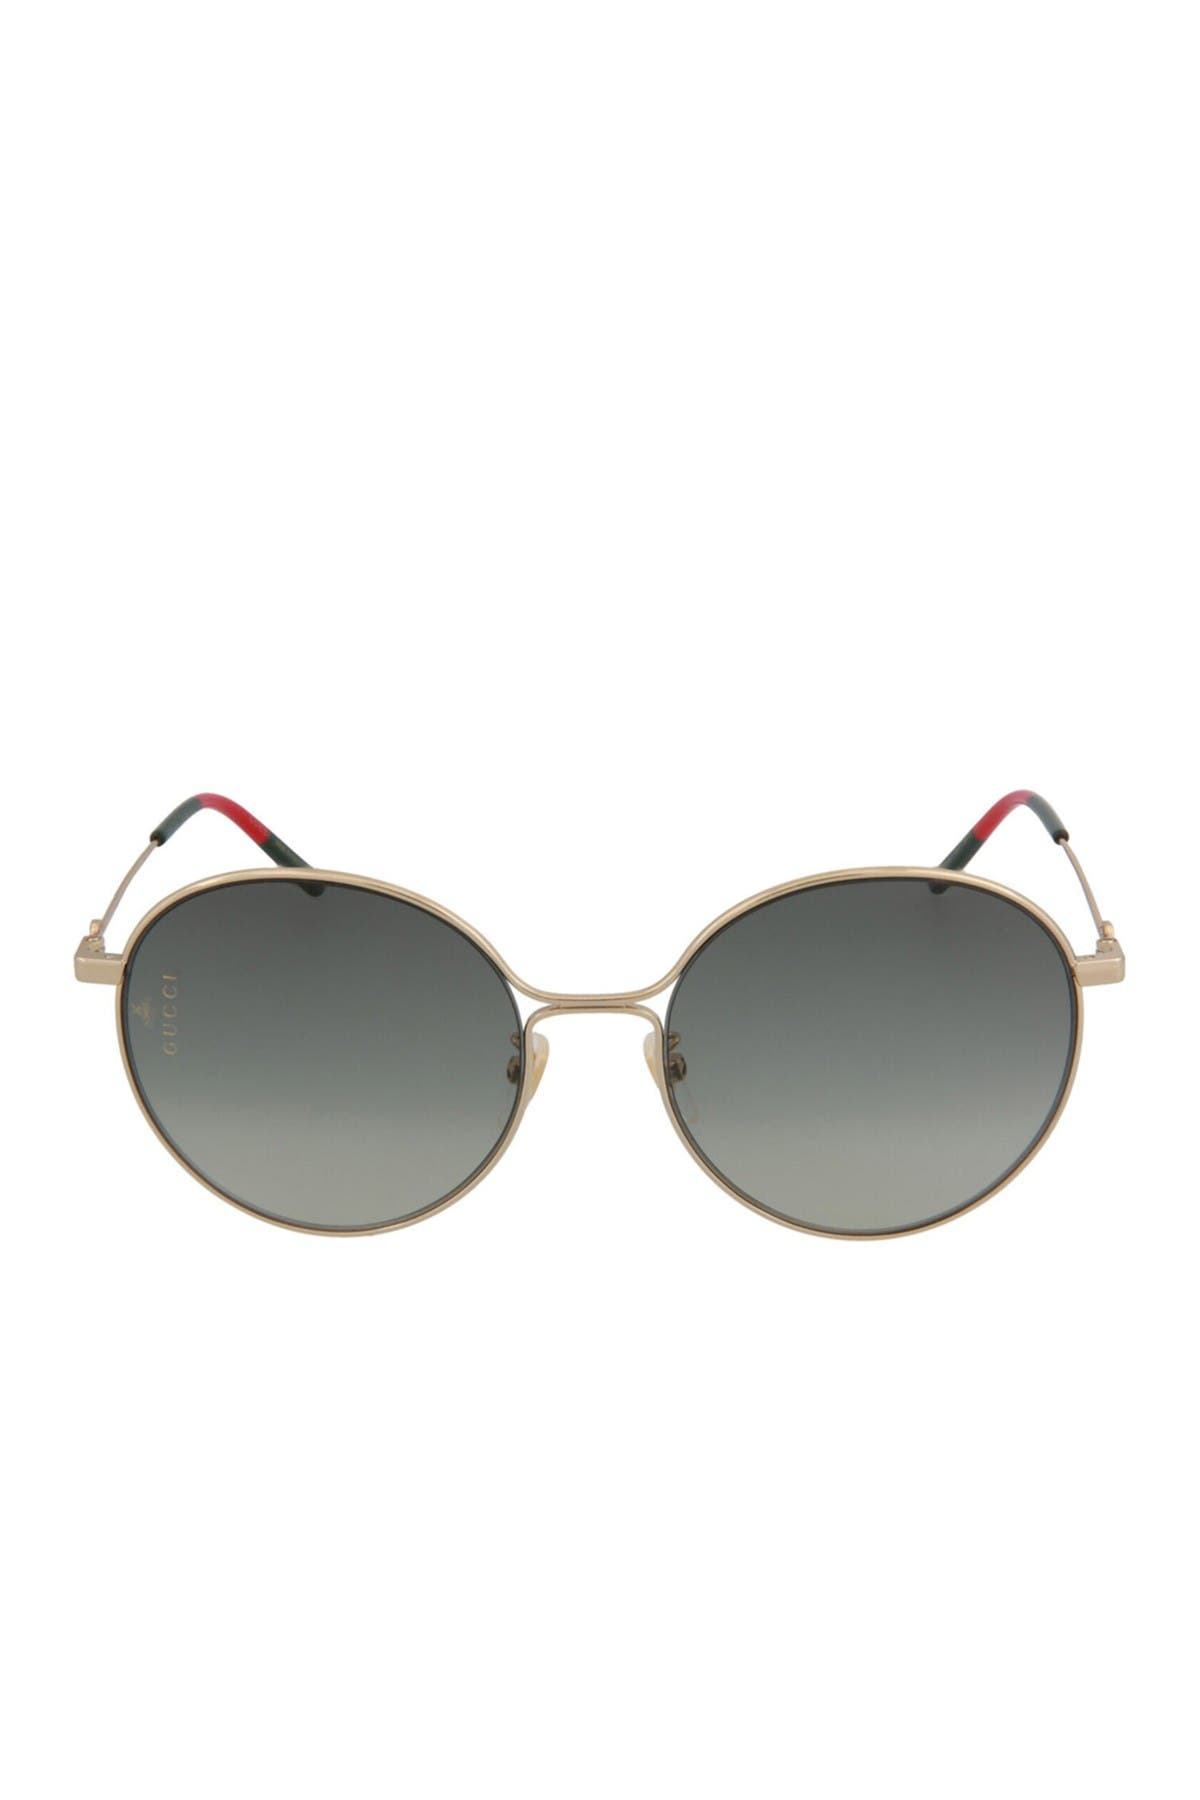 Gucci 56mm Fashion Round Sunglasses In Gold Gold Grey